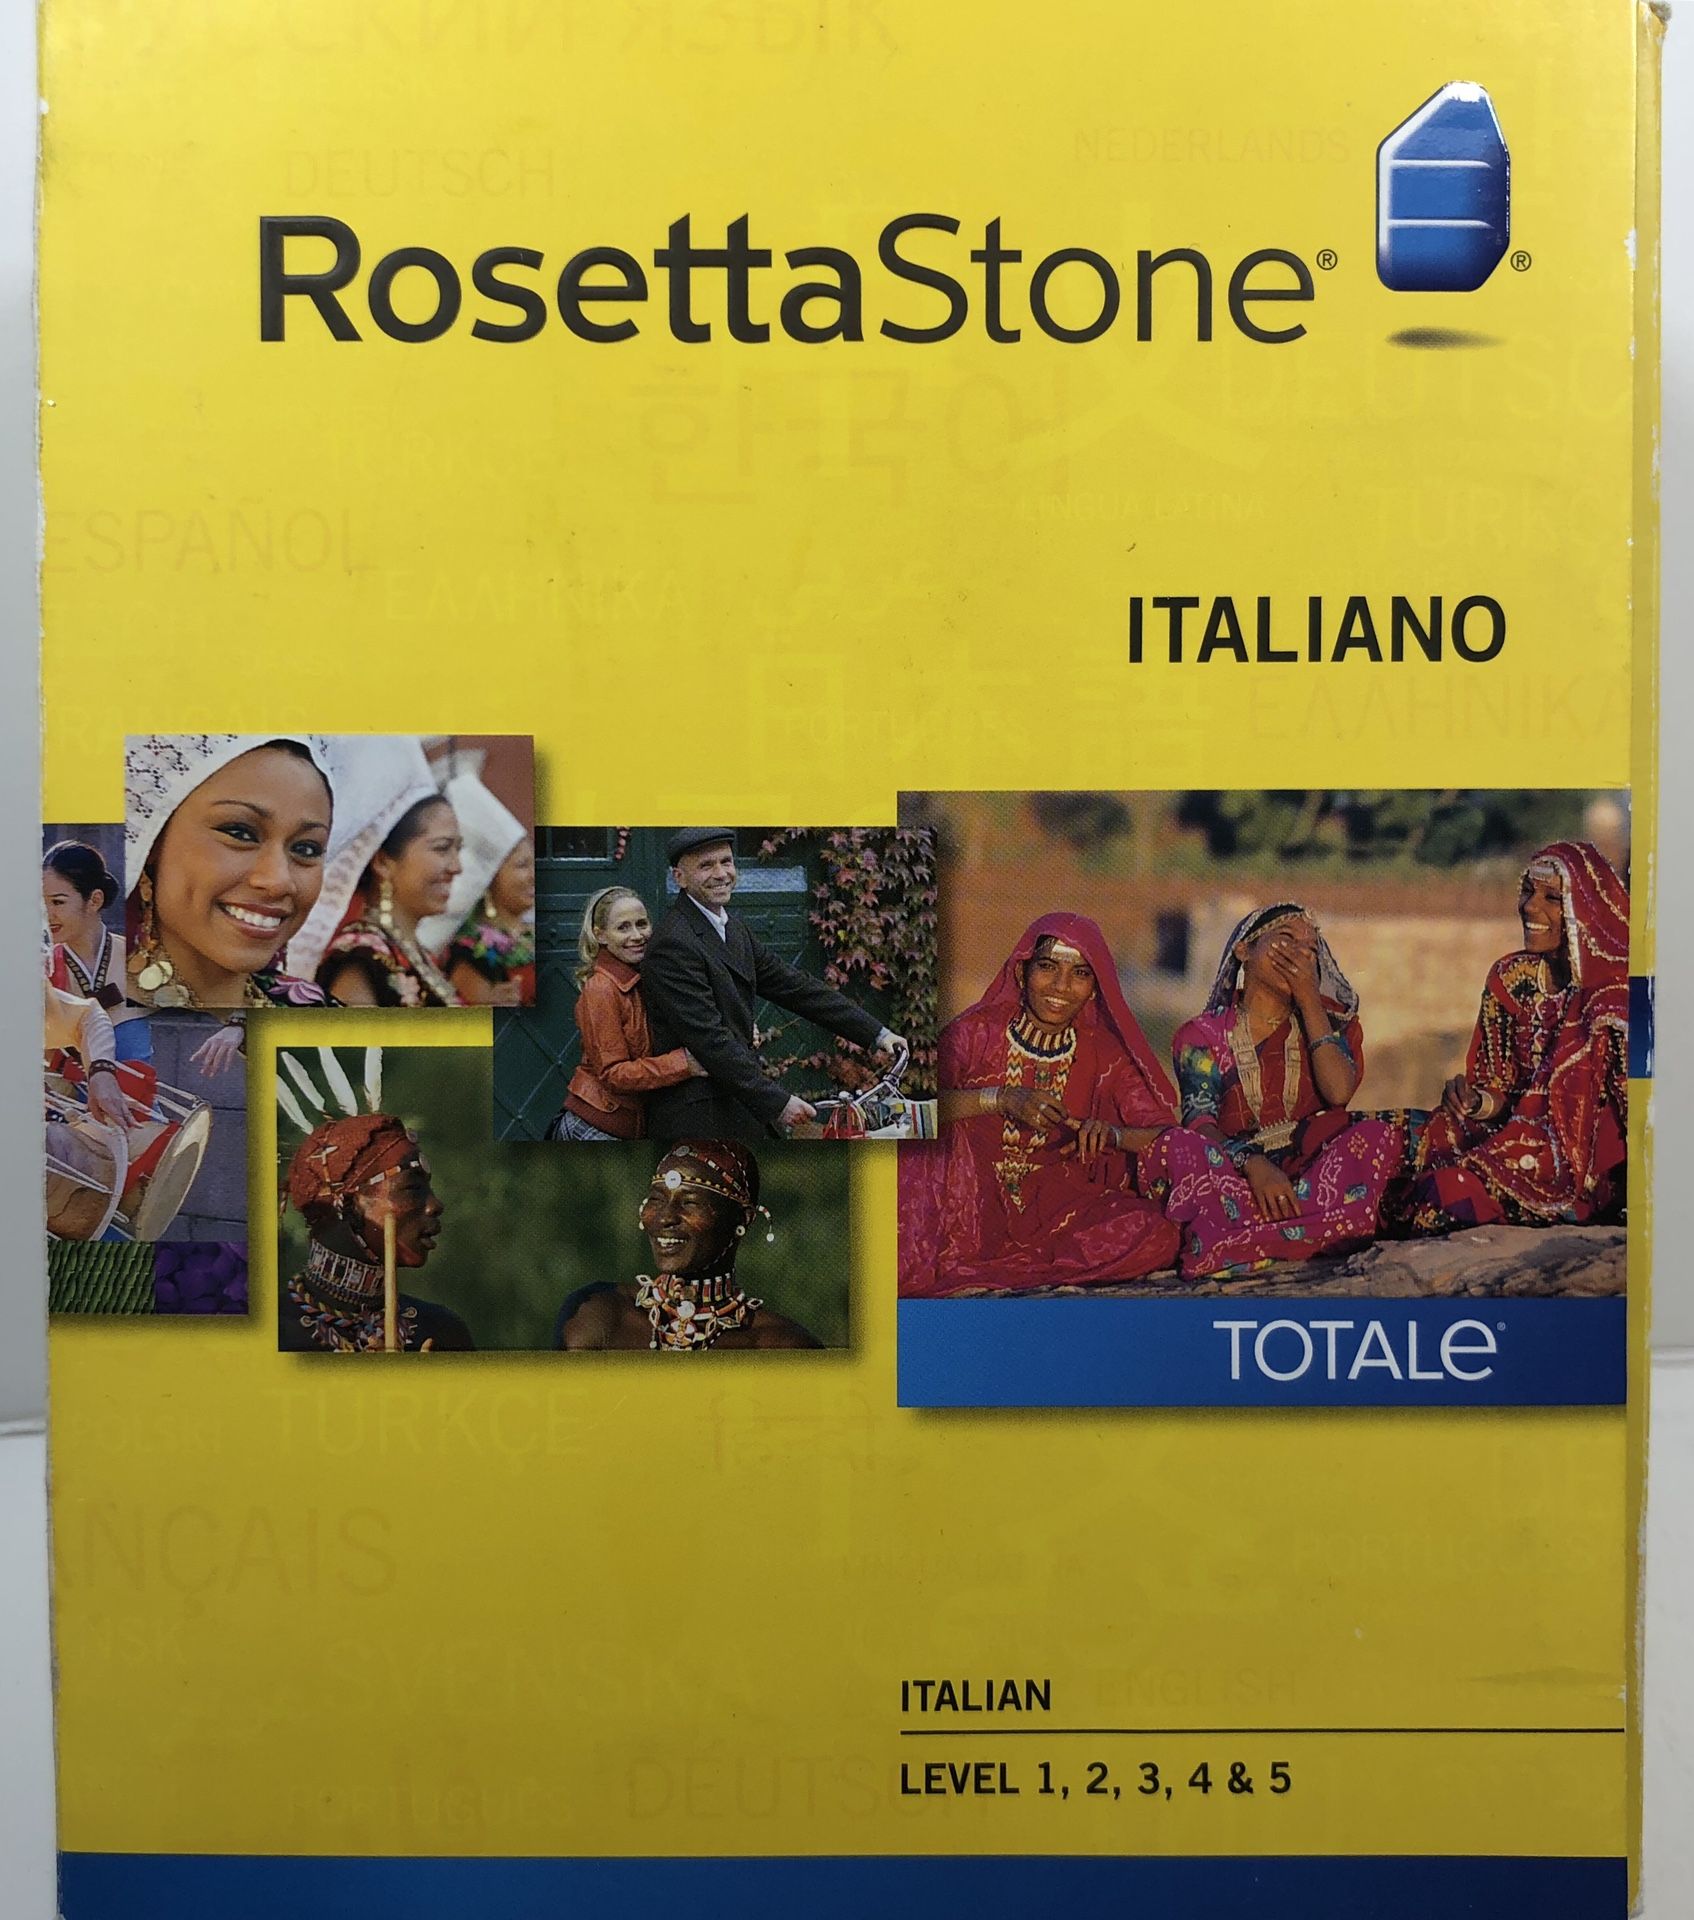 Rosetta Stone Italian levels 1-5 and headset